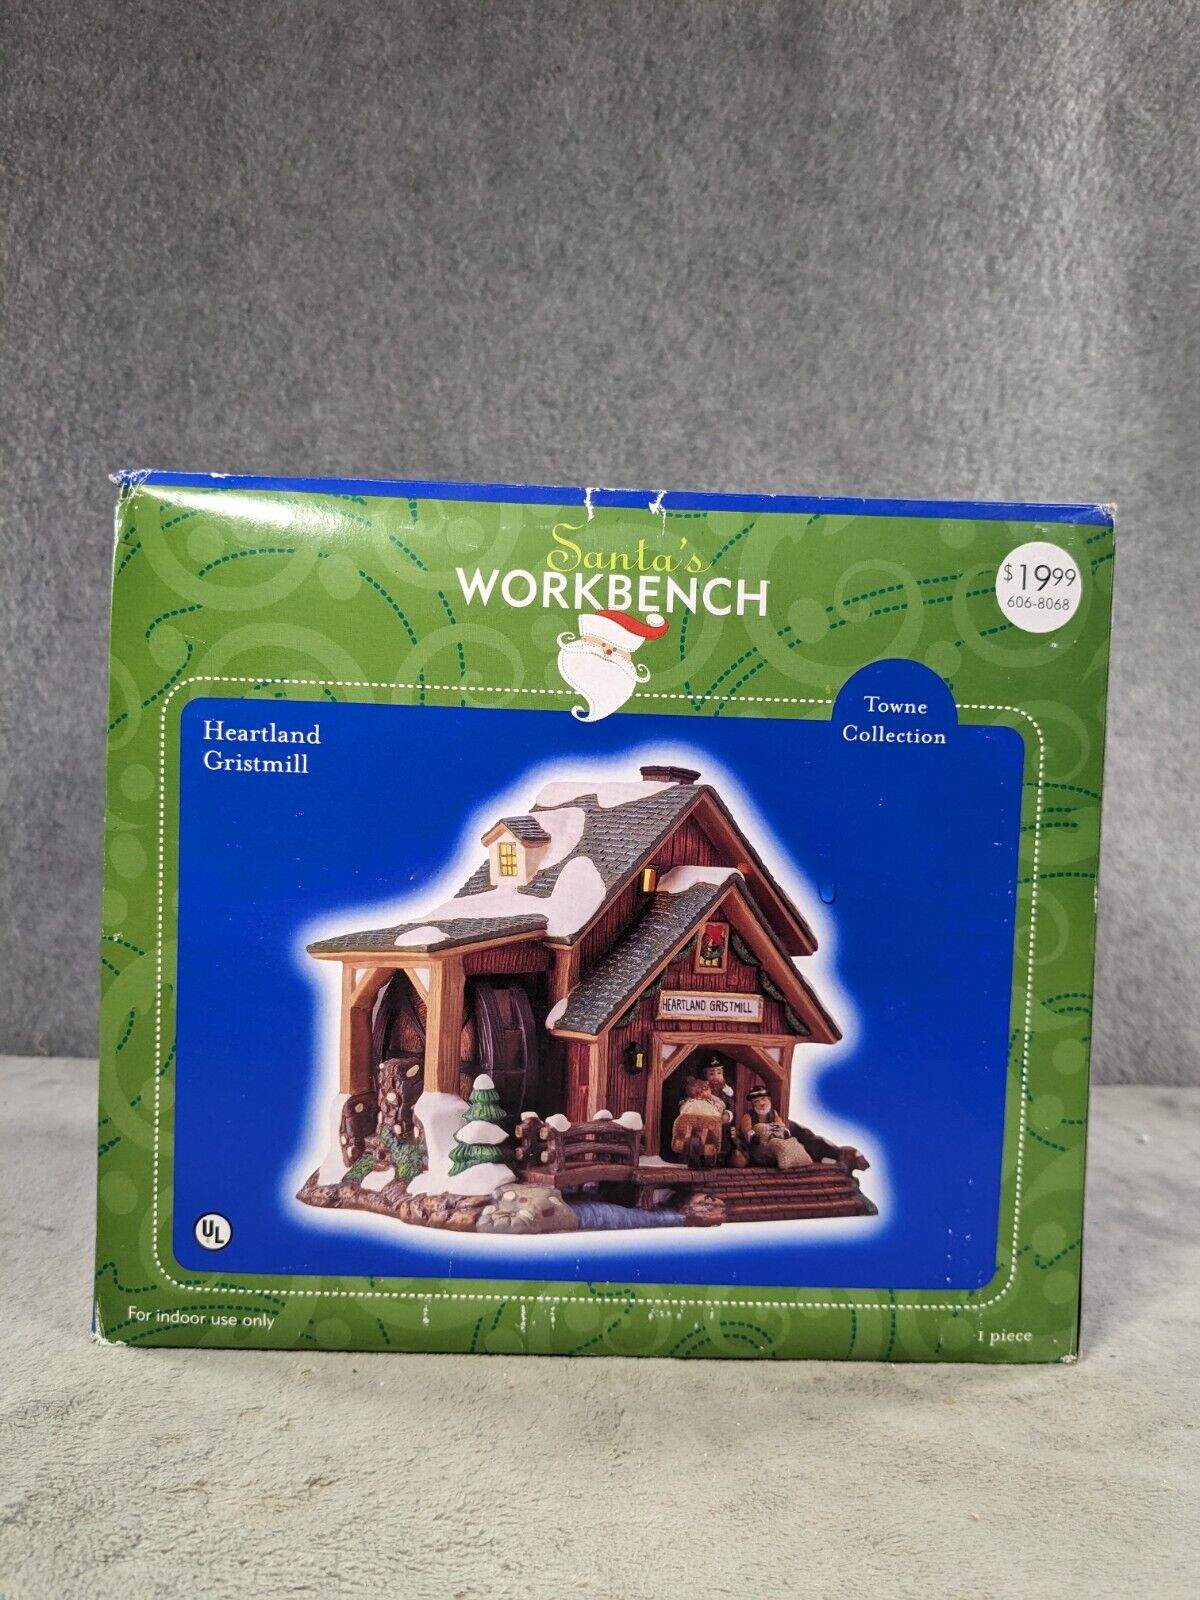 Heartland Gristmill Santa’s Workbench 6.5” Porcelain Holiday Light-up